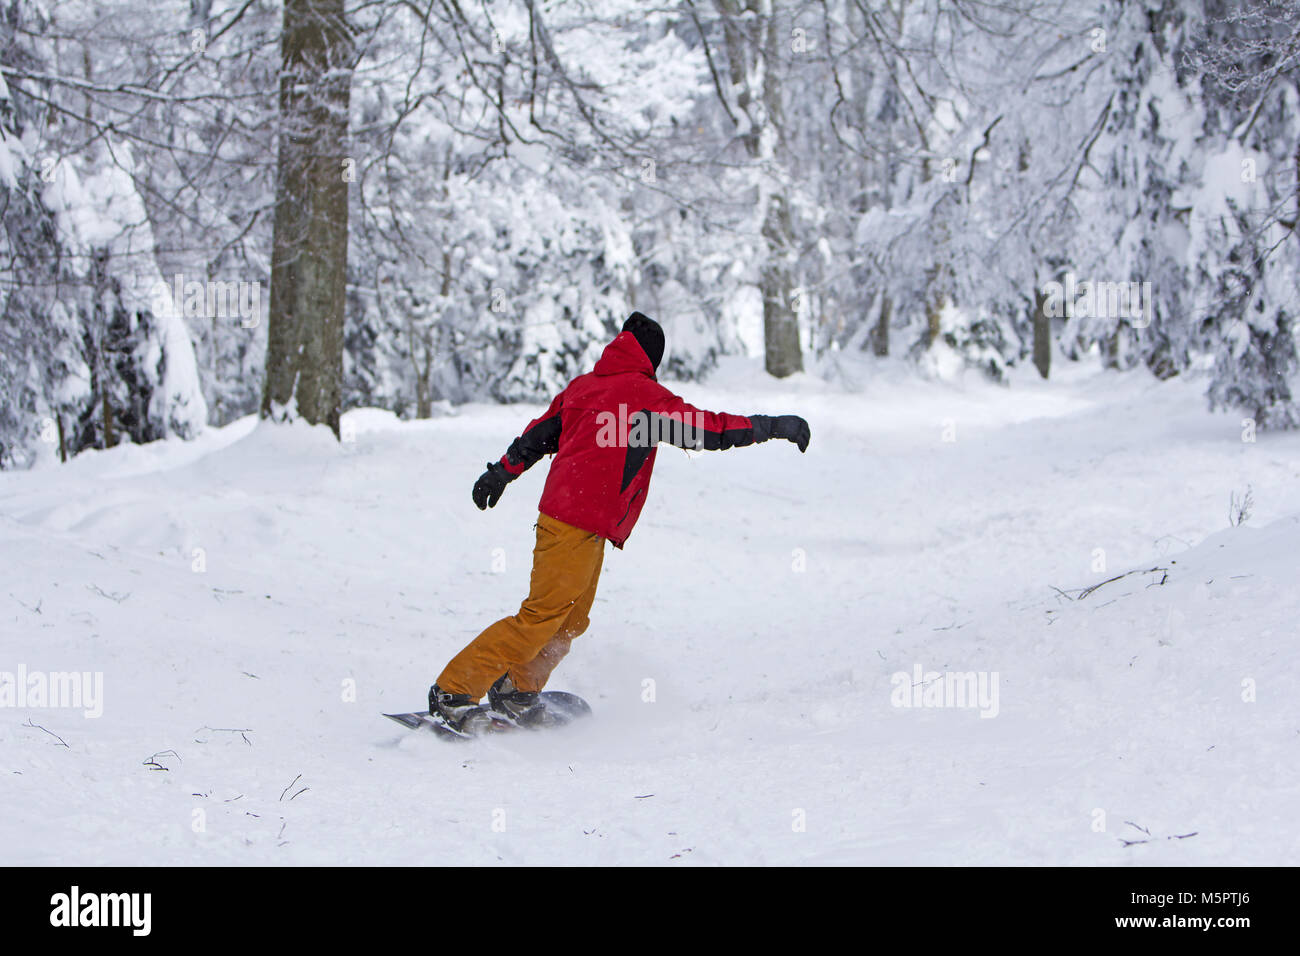 Winter sport snowboarder at ski slopeand alps mountains landscape Stock Photo